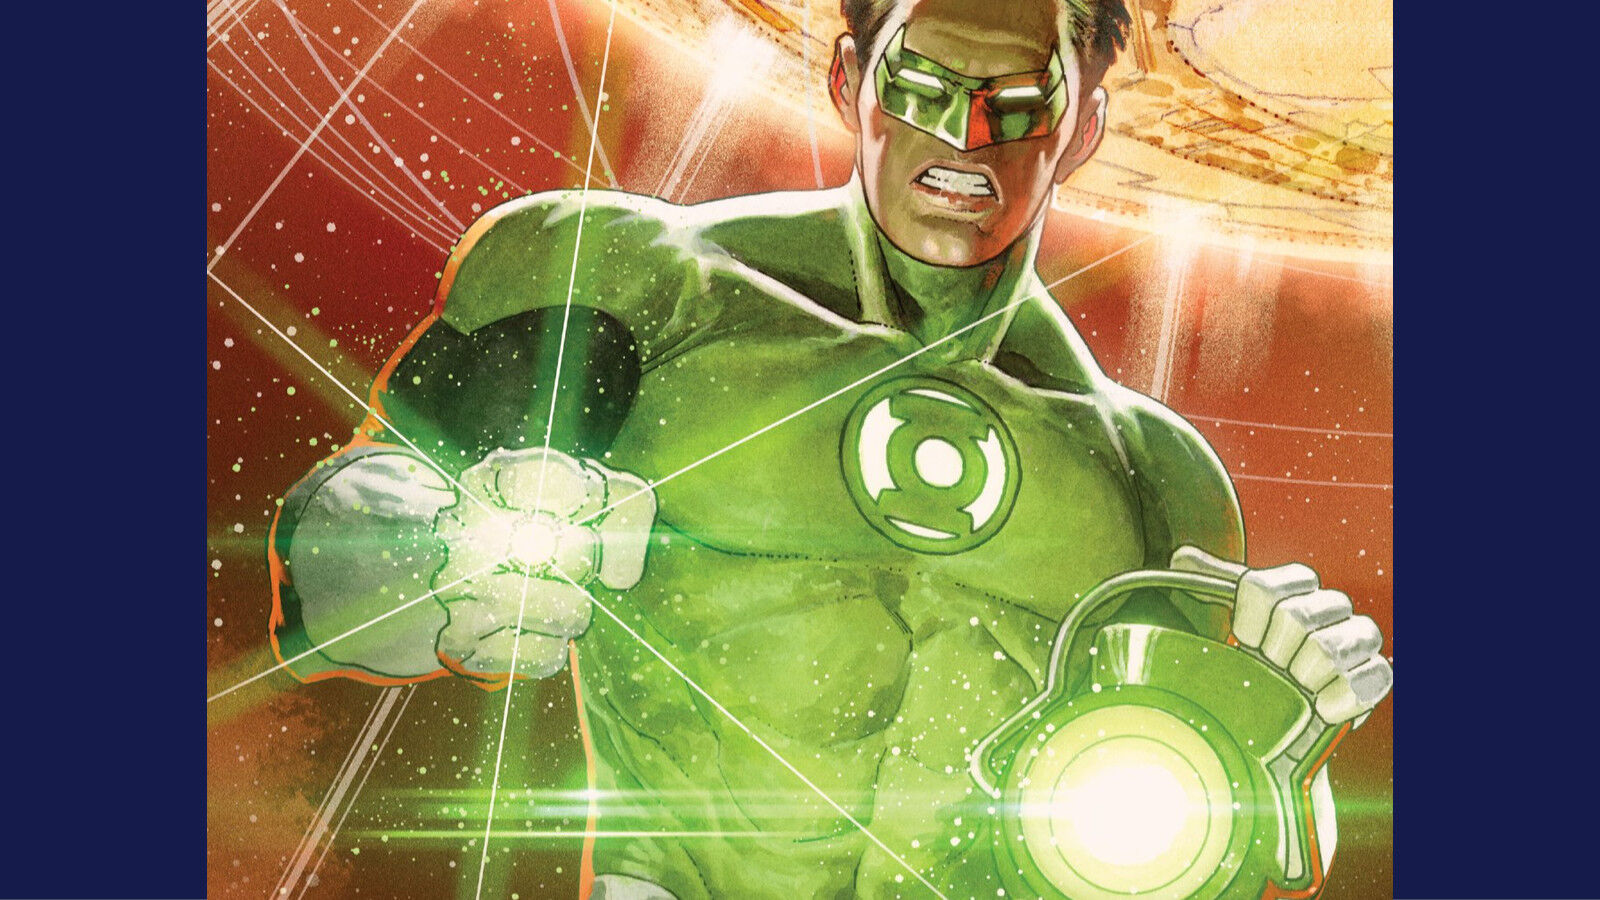 DC Comics' Green Lantern on the back cover of Green Lantern Season 2 Issue #12